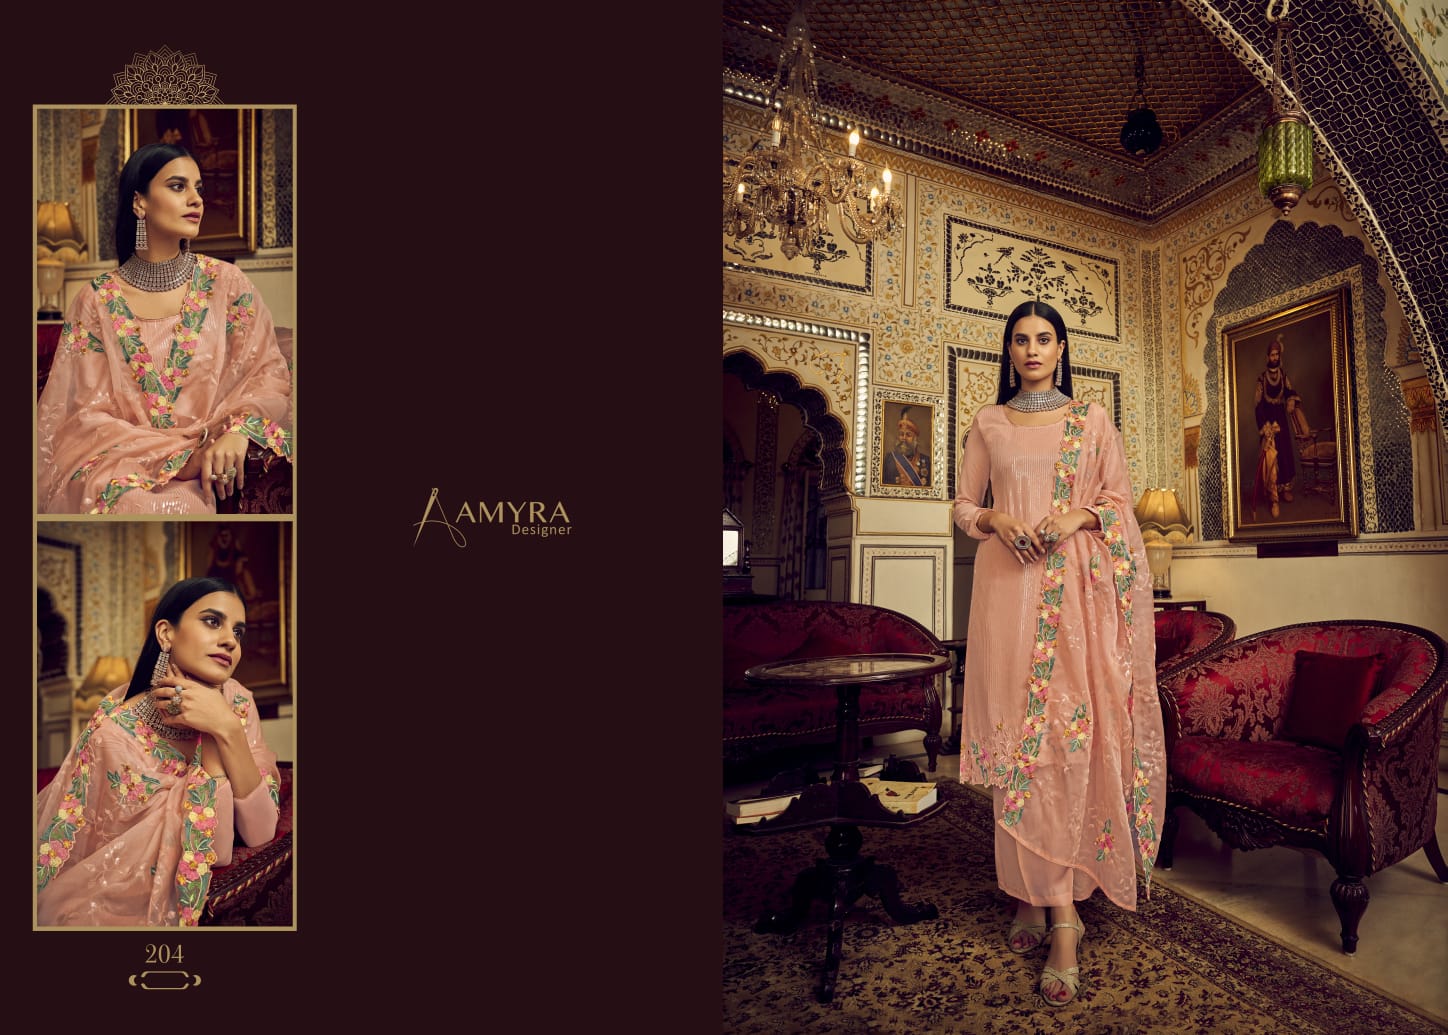 amyra designer mariya b festival collection georget gorgeous look salwar suit catalog